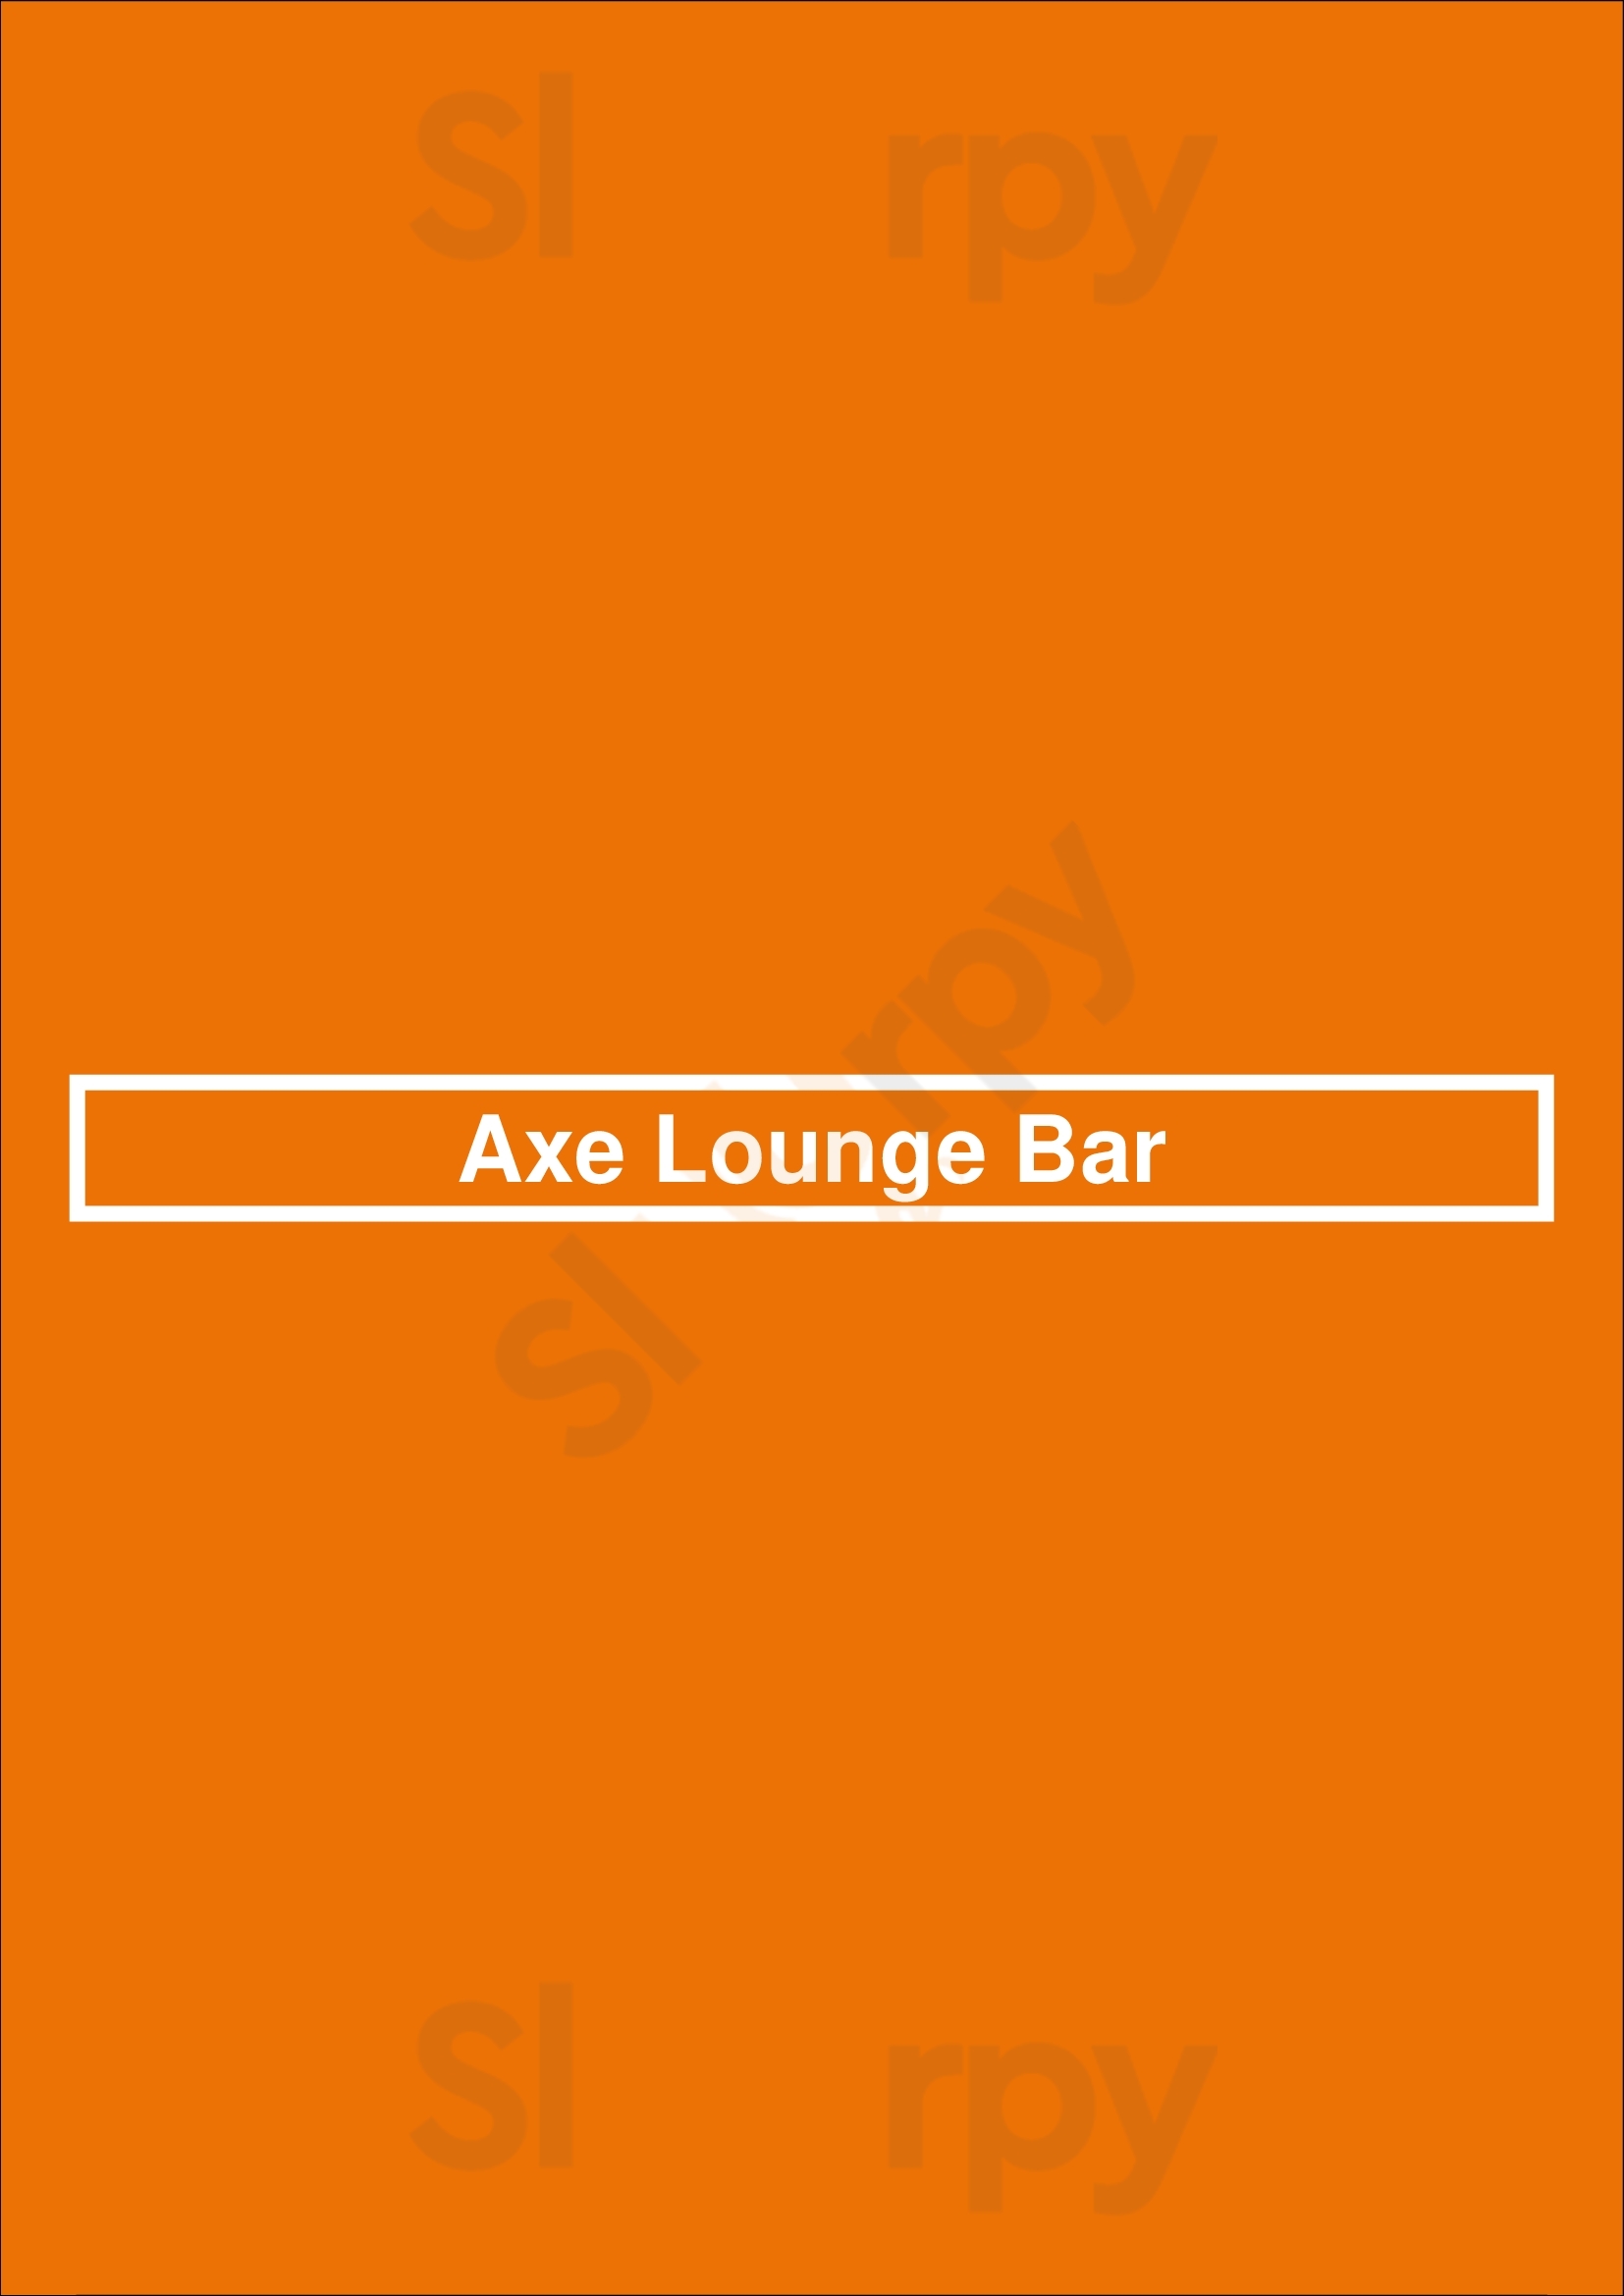 Axe Lounge Bar Mont Tremblant Menu - 1